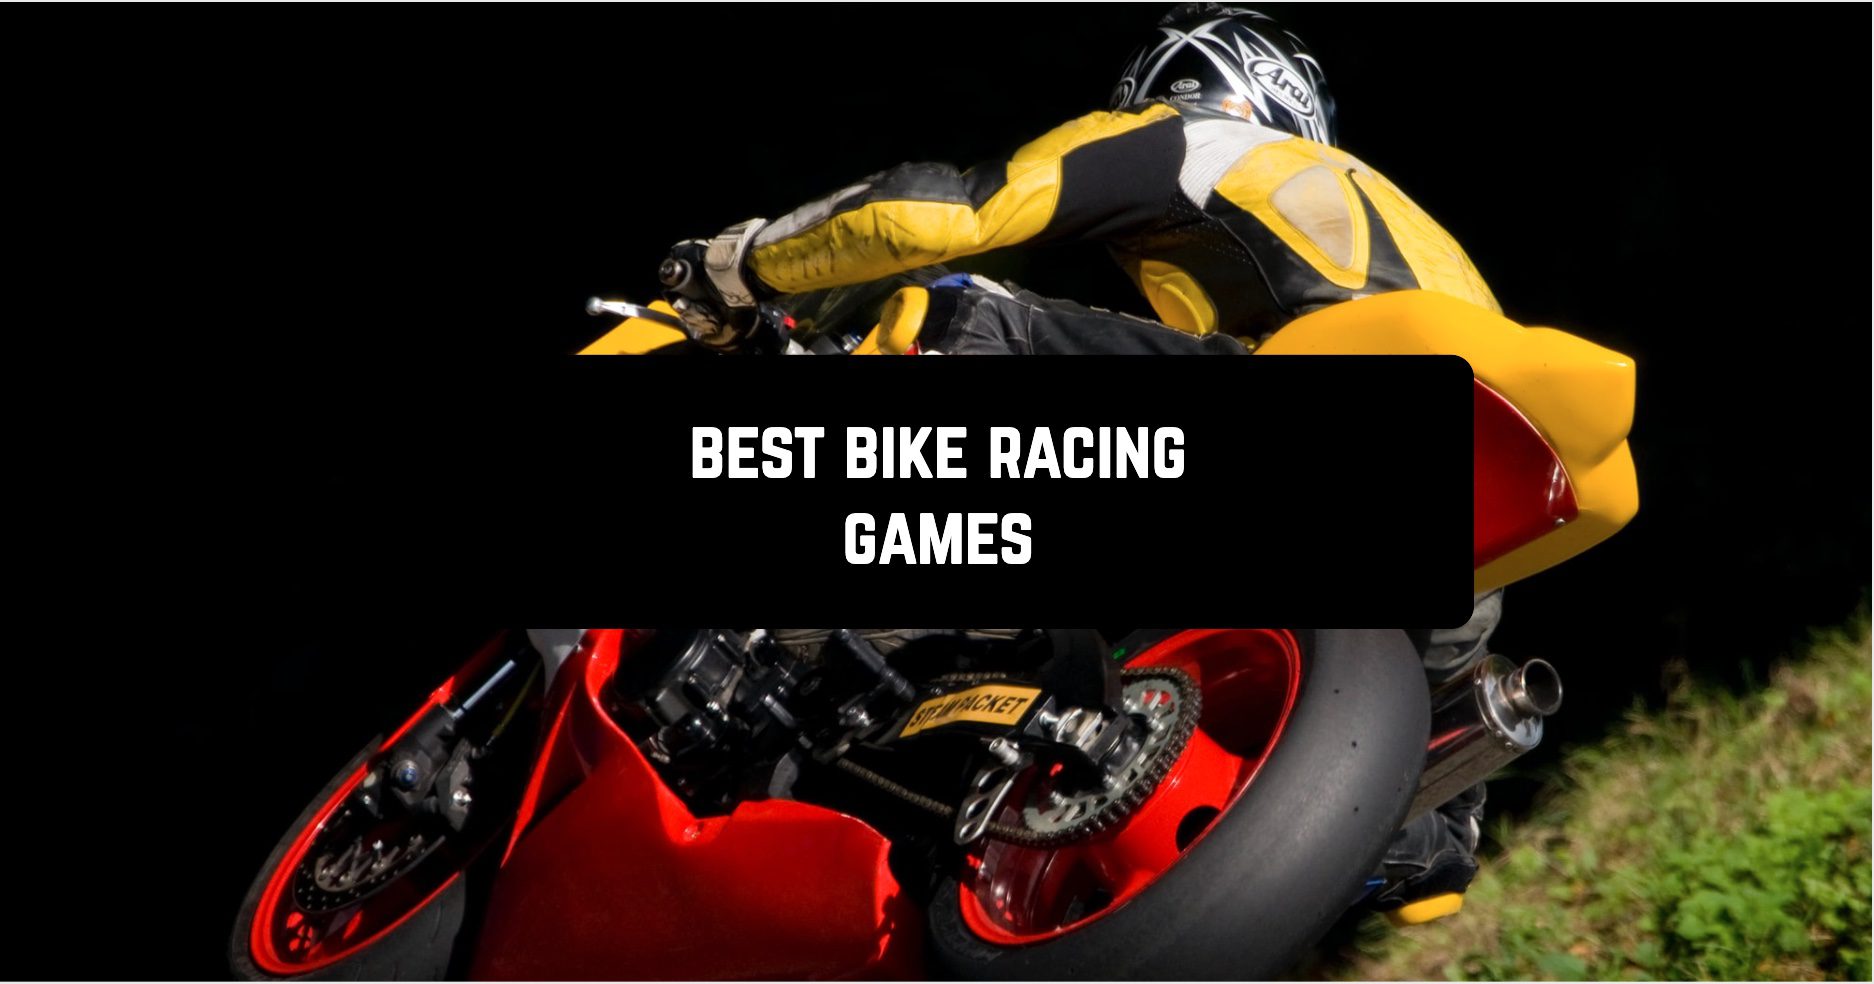 Best bike racing games